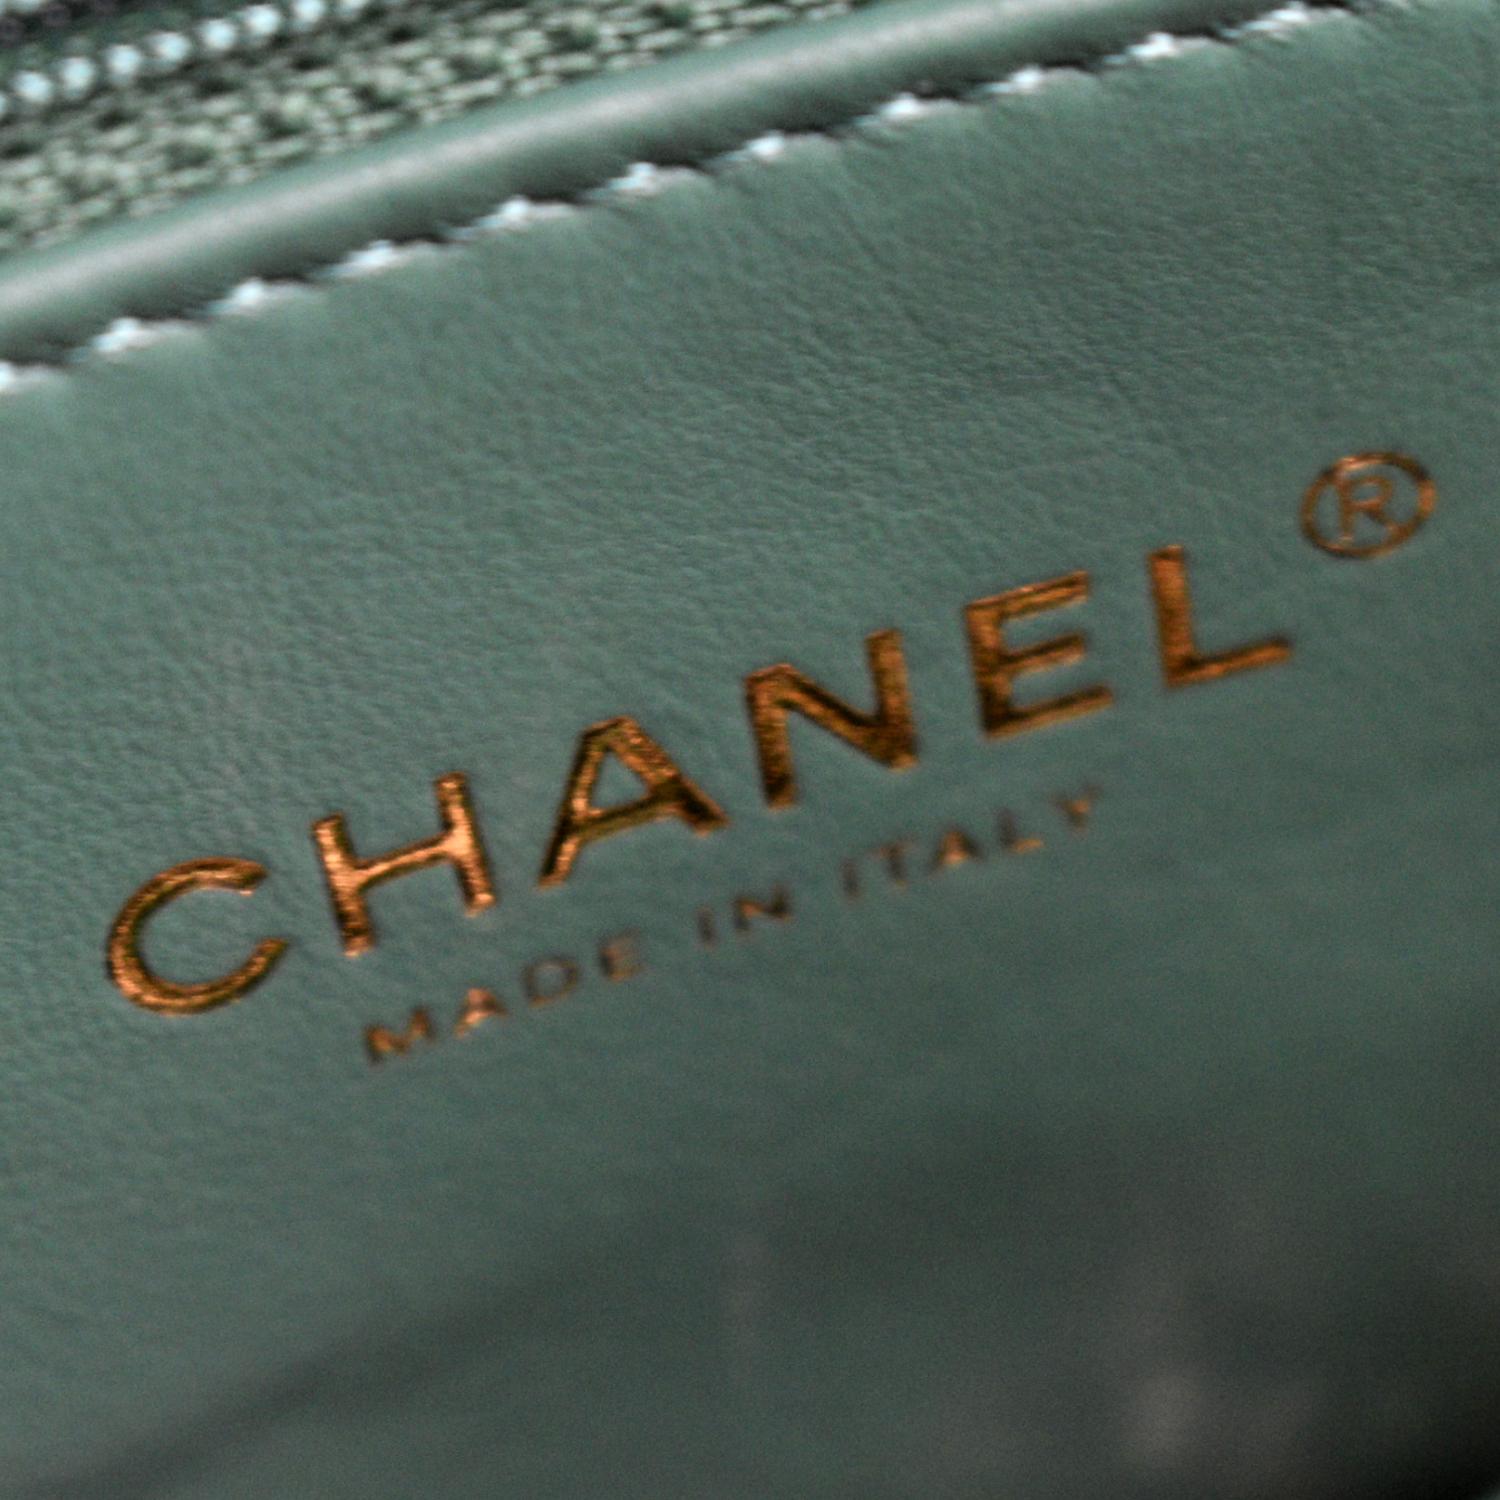 Chanel Blue Caviar Leather Medium Coco Top Handle Bag Chanel